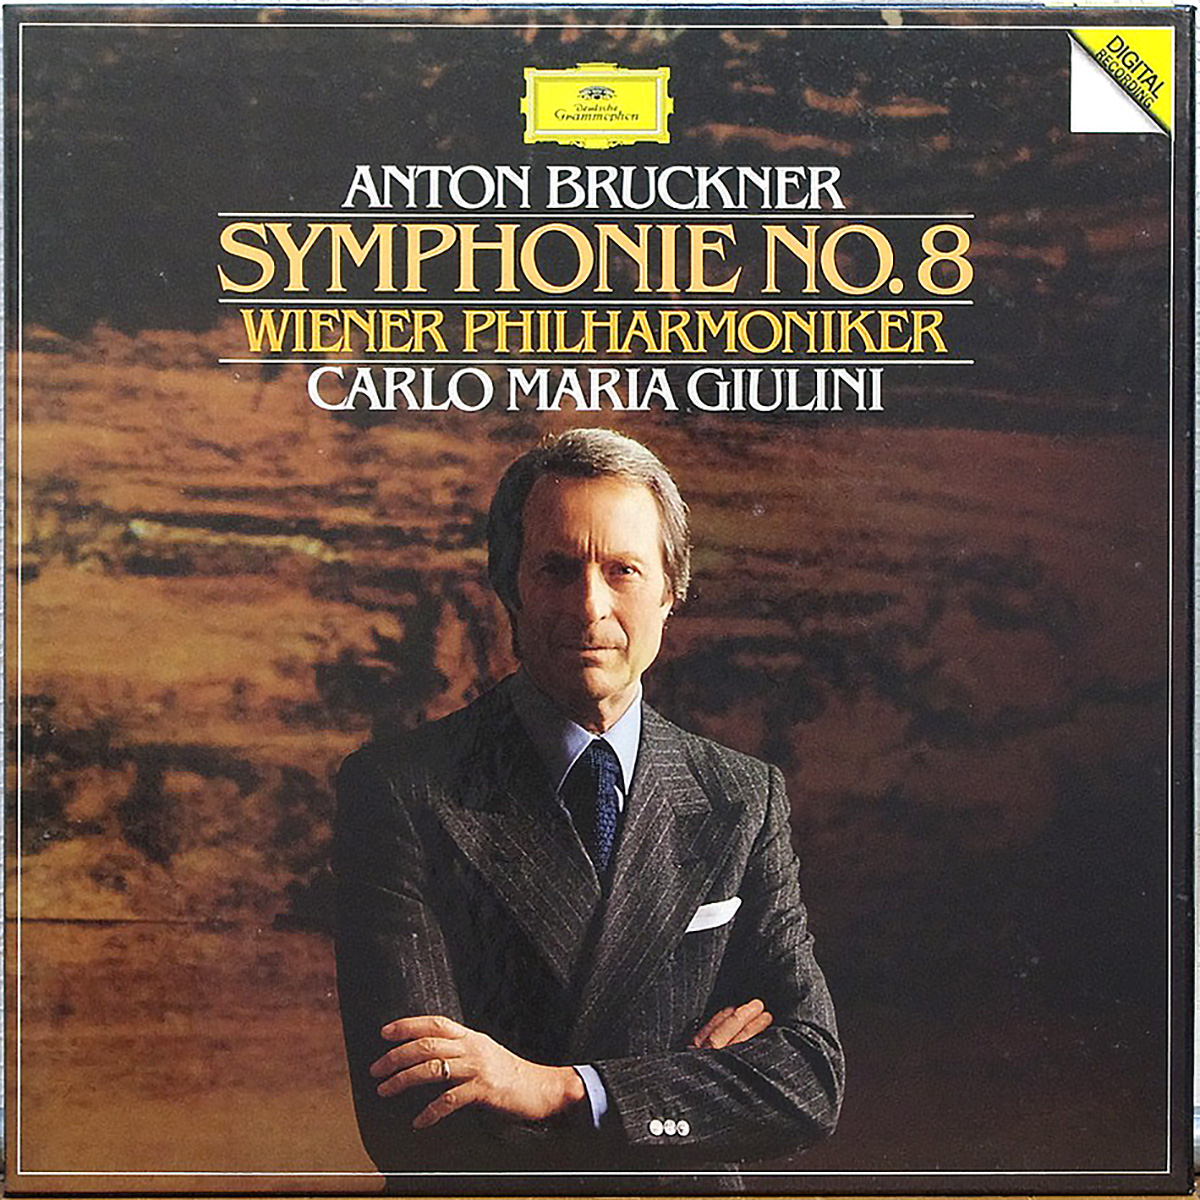 DGG 415 124 Bruckner Symphonie 8 Giulini DGG Digital Aufnahme